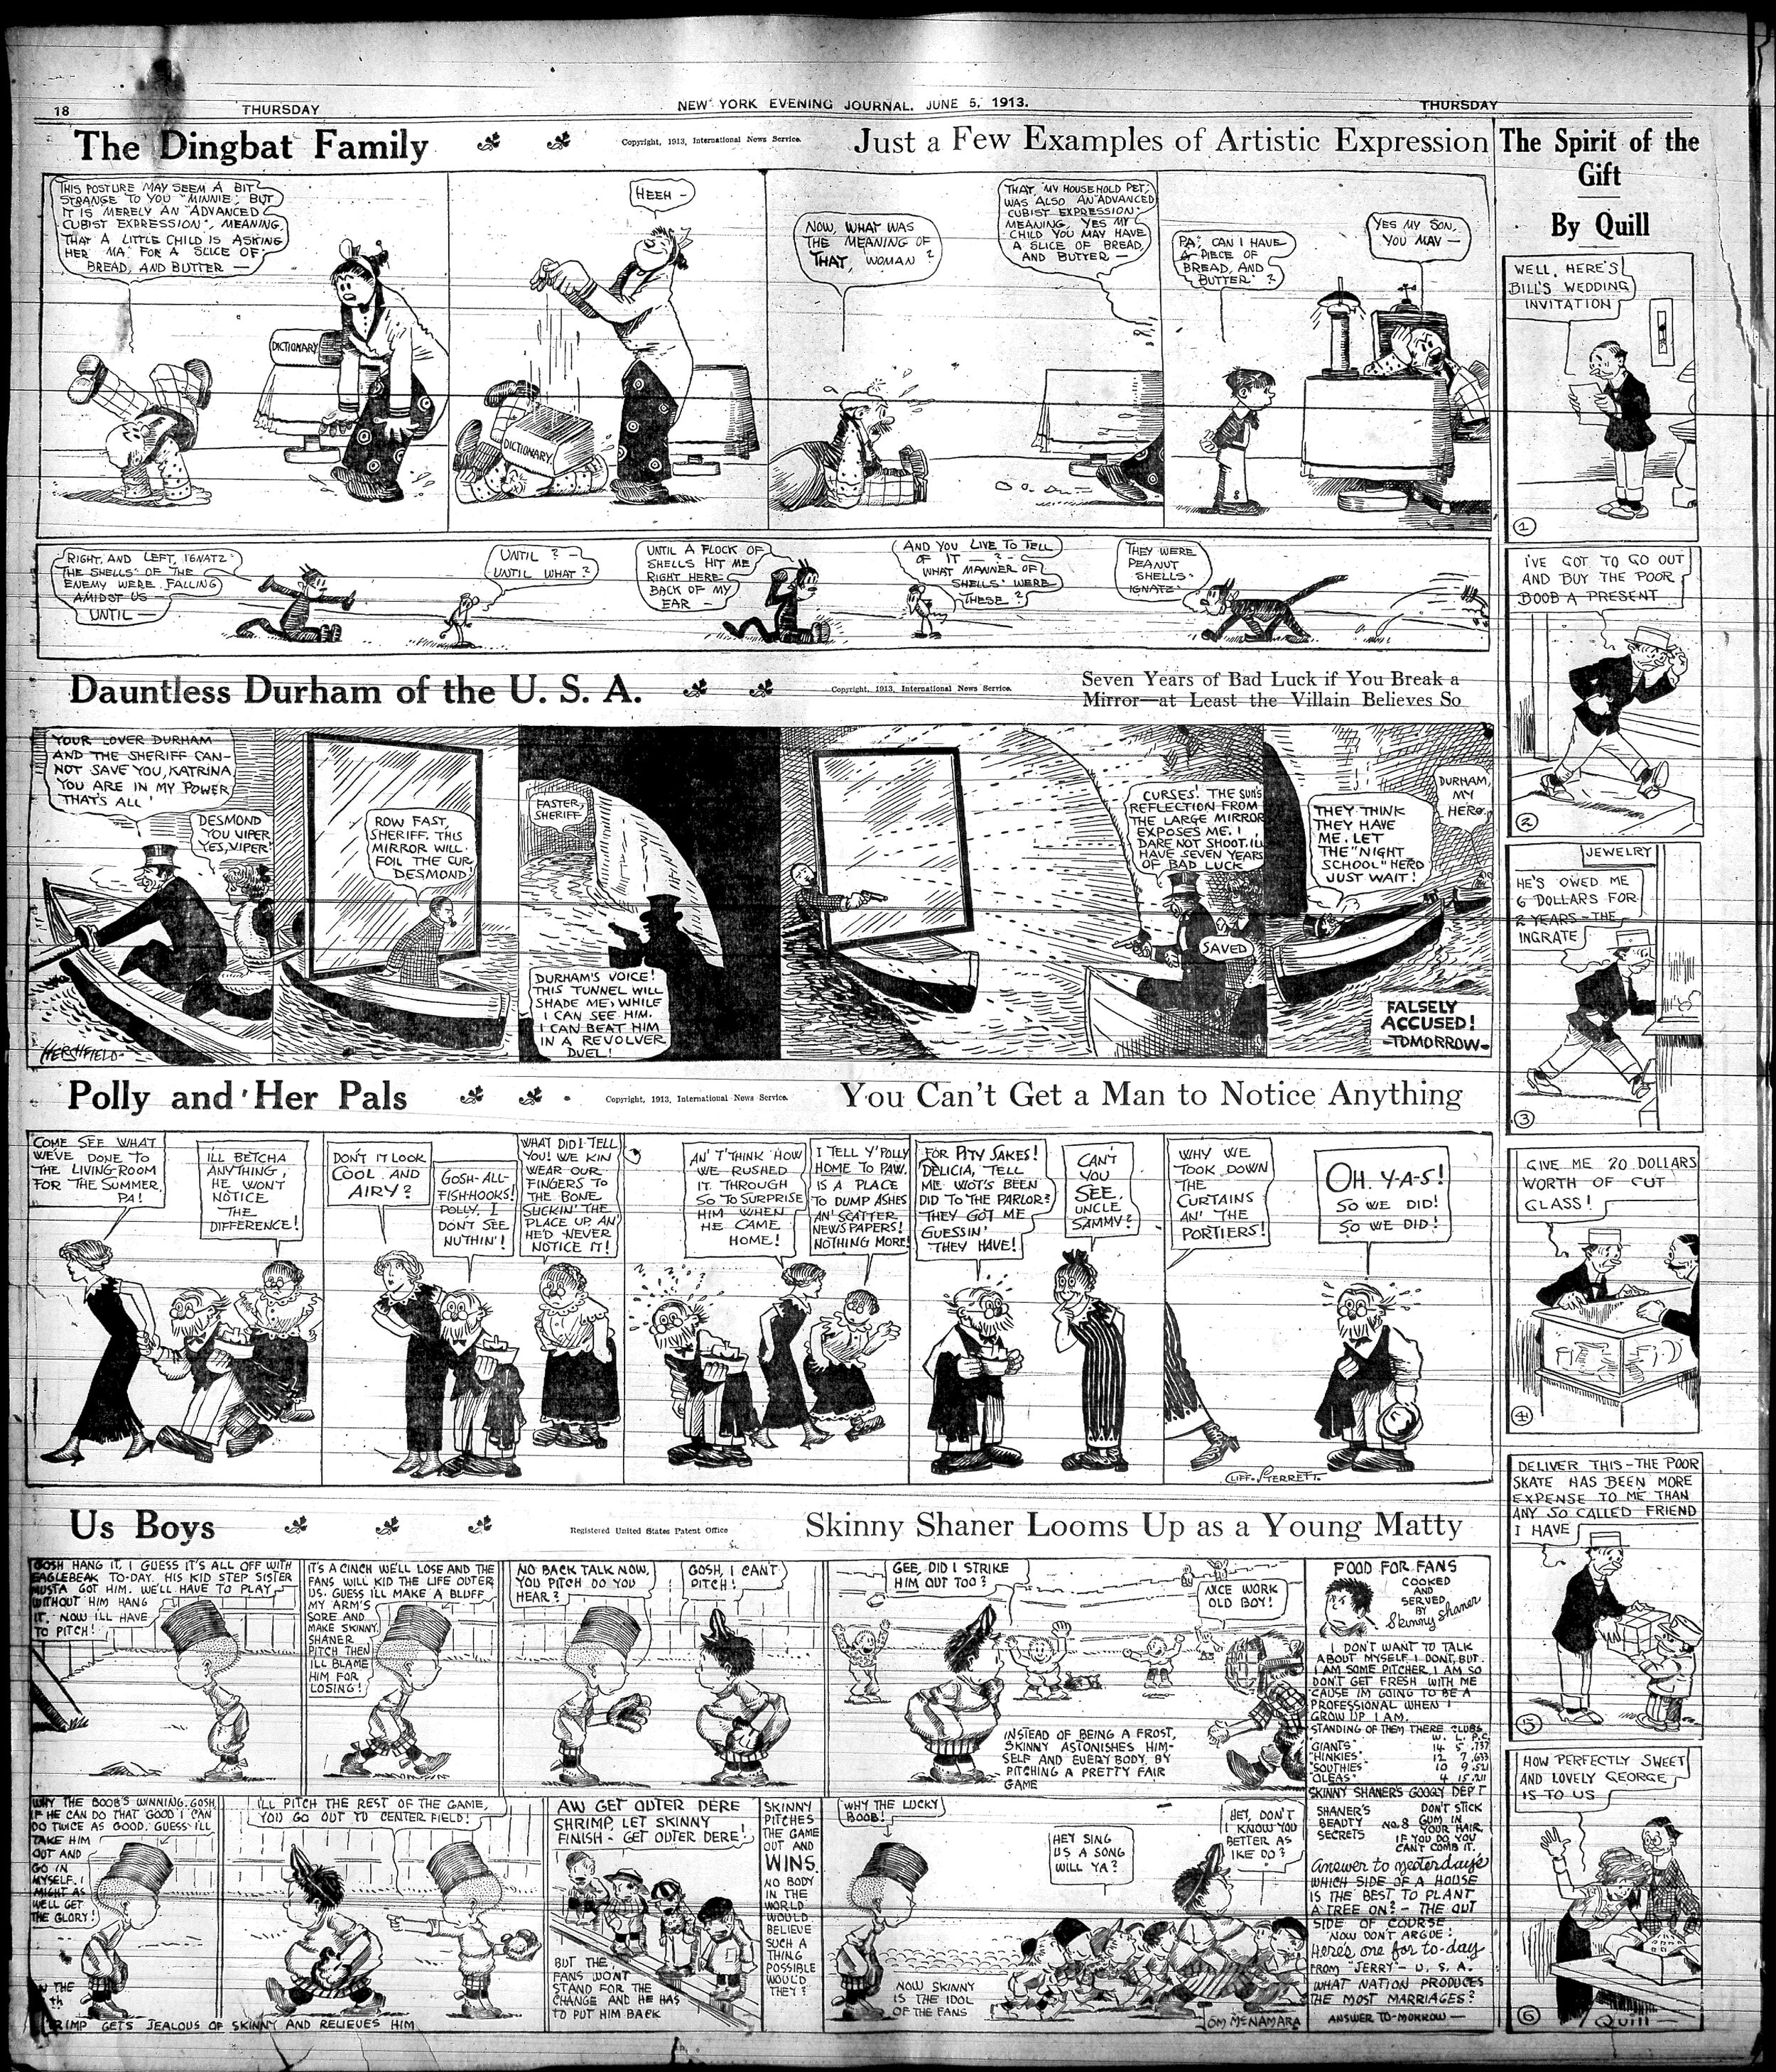 13-nyej-05-31-1913-comics-page-with-dingbat-cubism-gag-.jpg